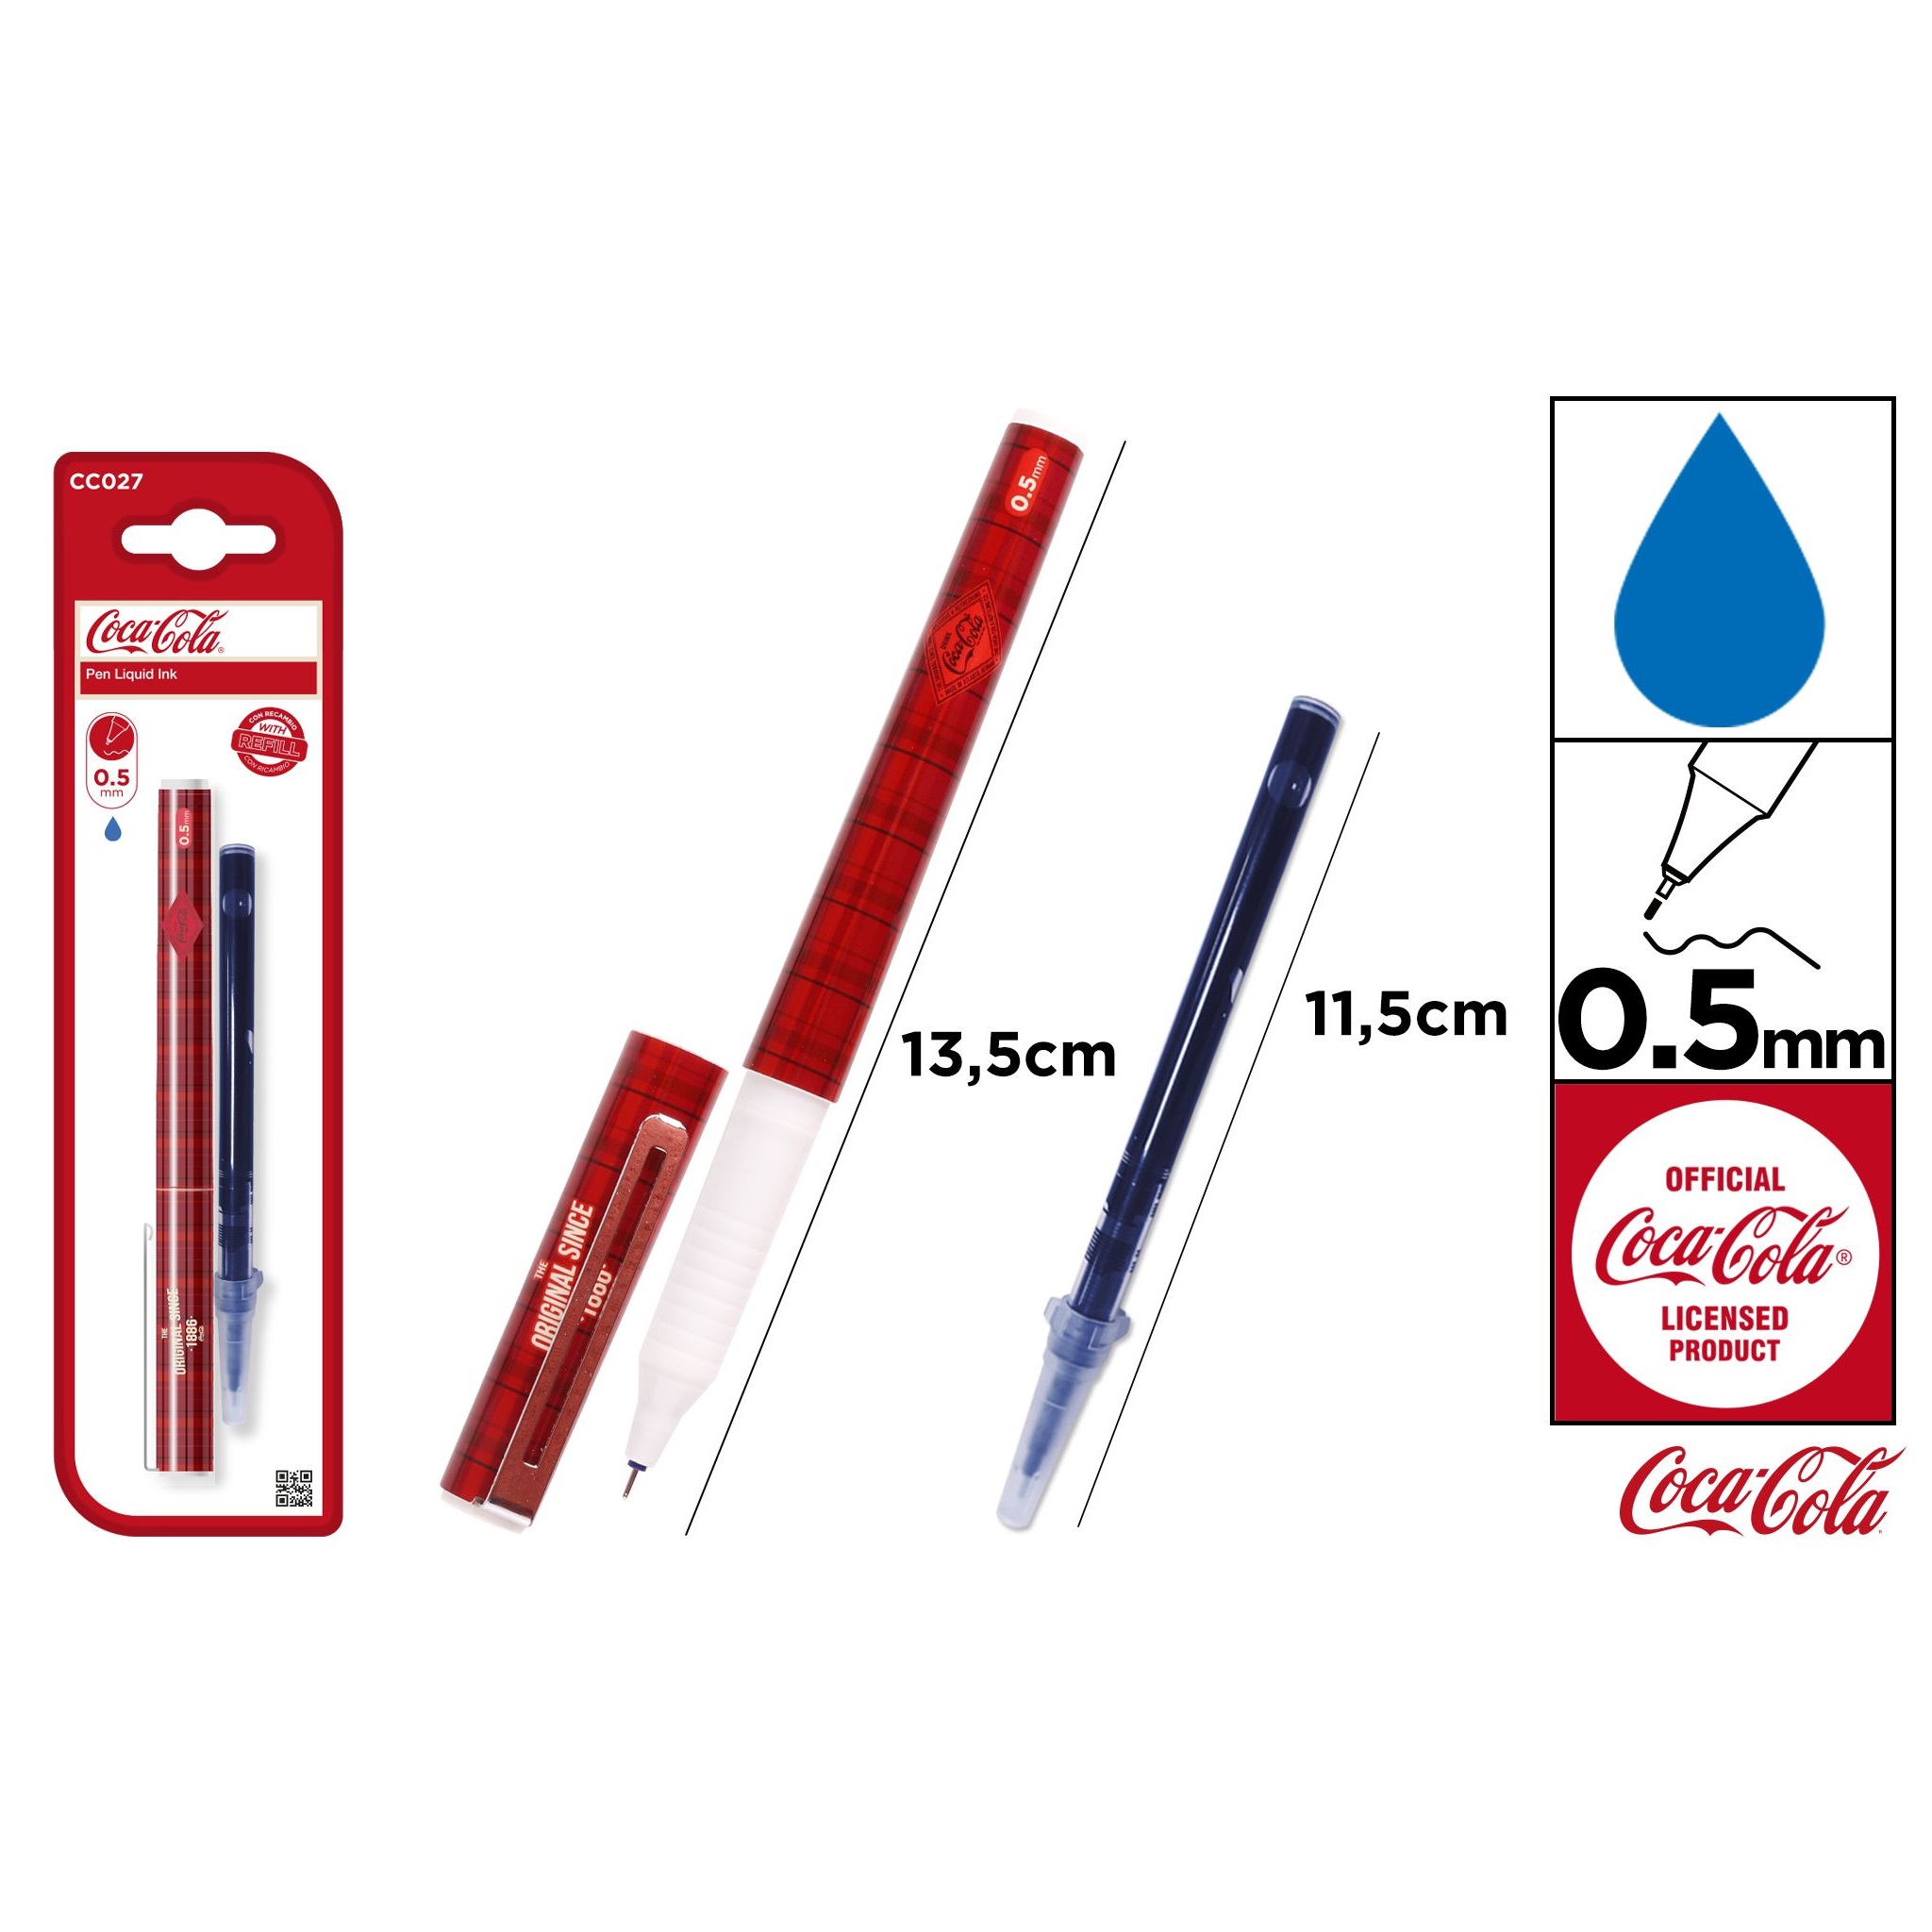 CC027 0.5mm Straight Liquid Pen Coca-Cola Co-branded Ballpoint Pen နှင့် Refill ပါရှိပါသည်။